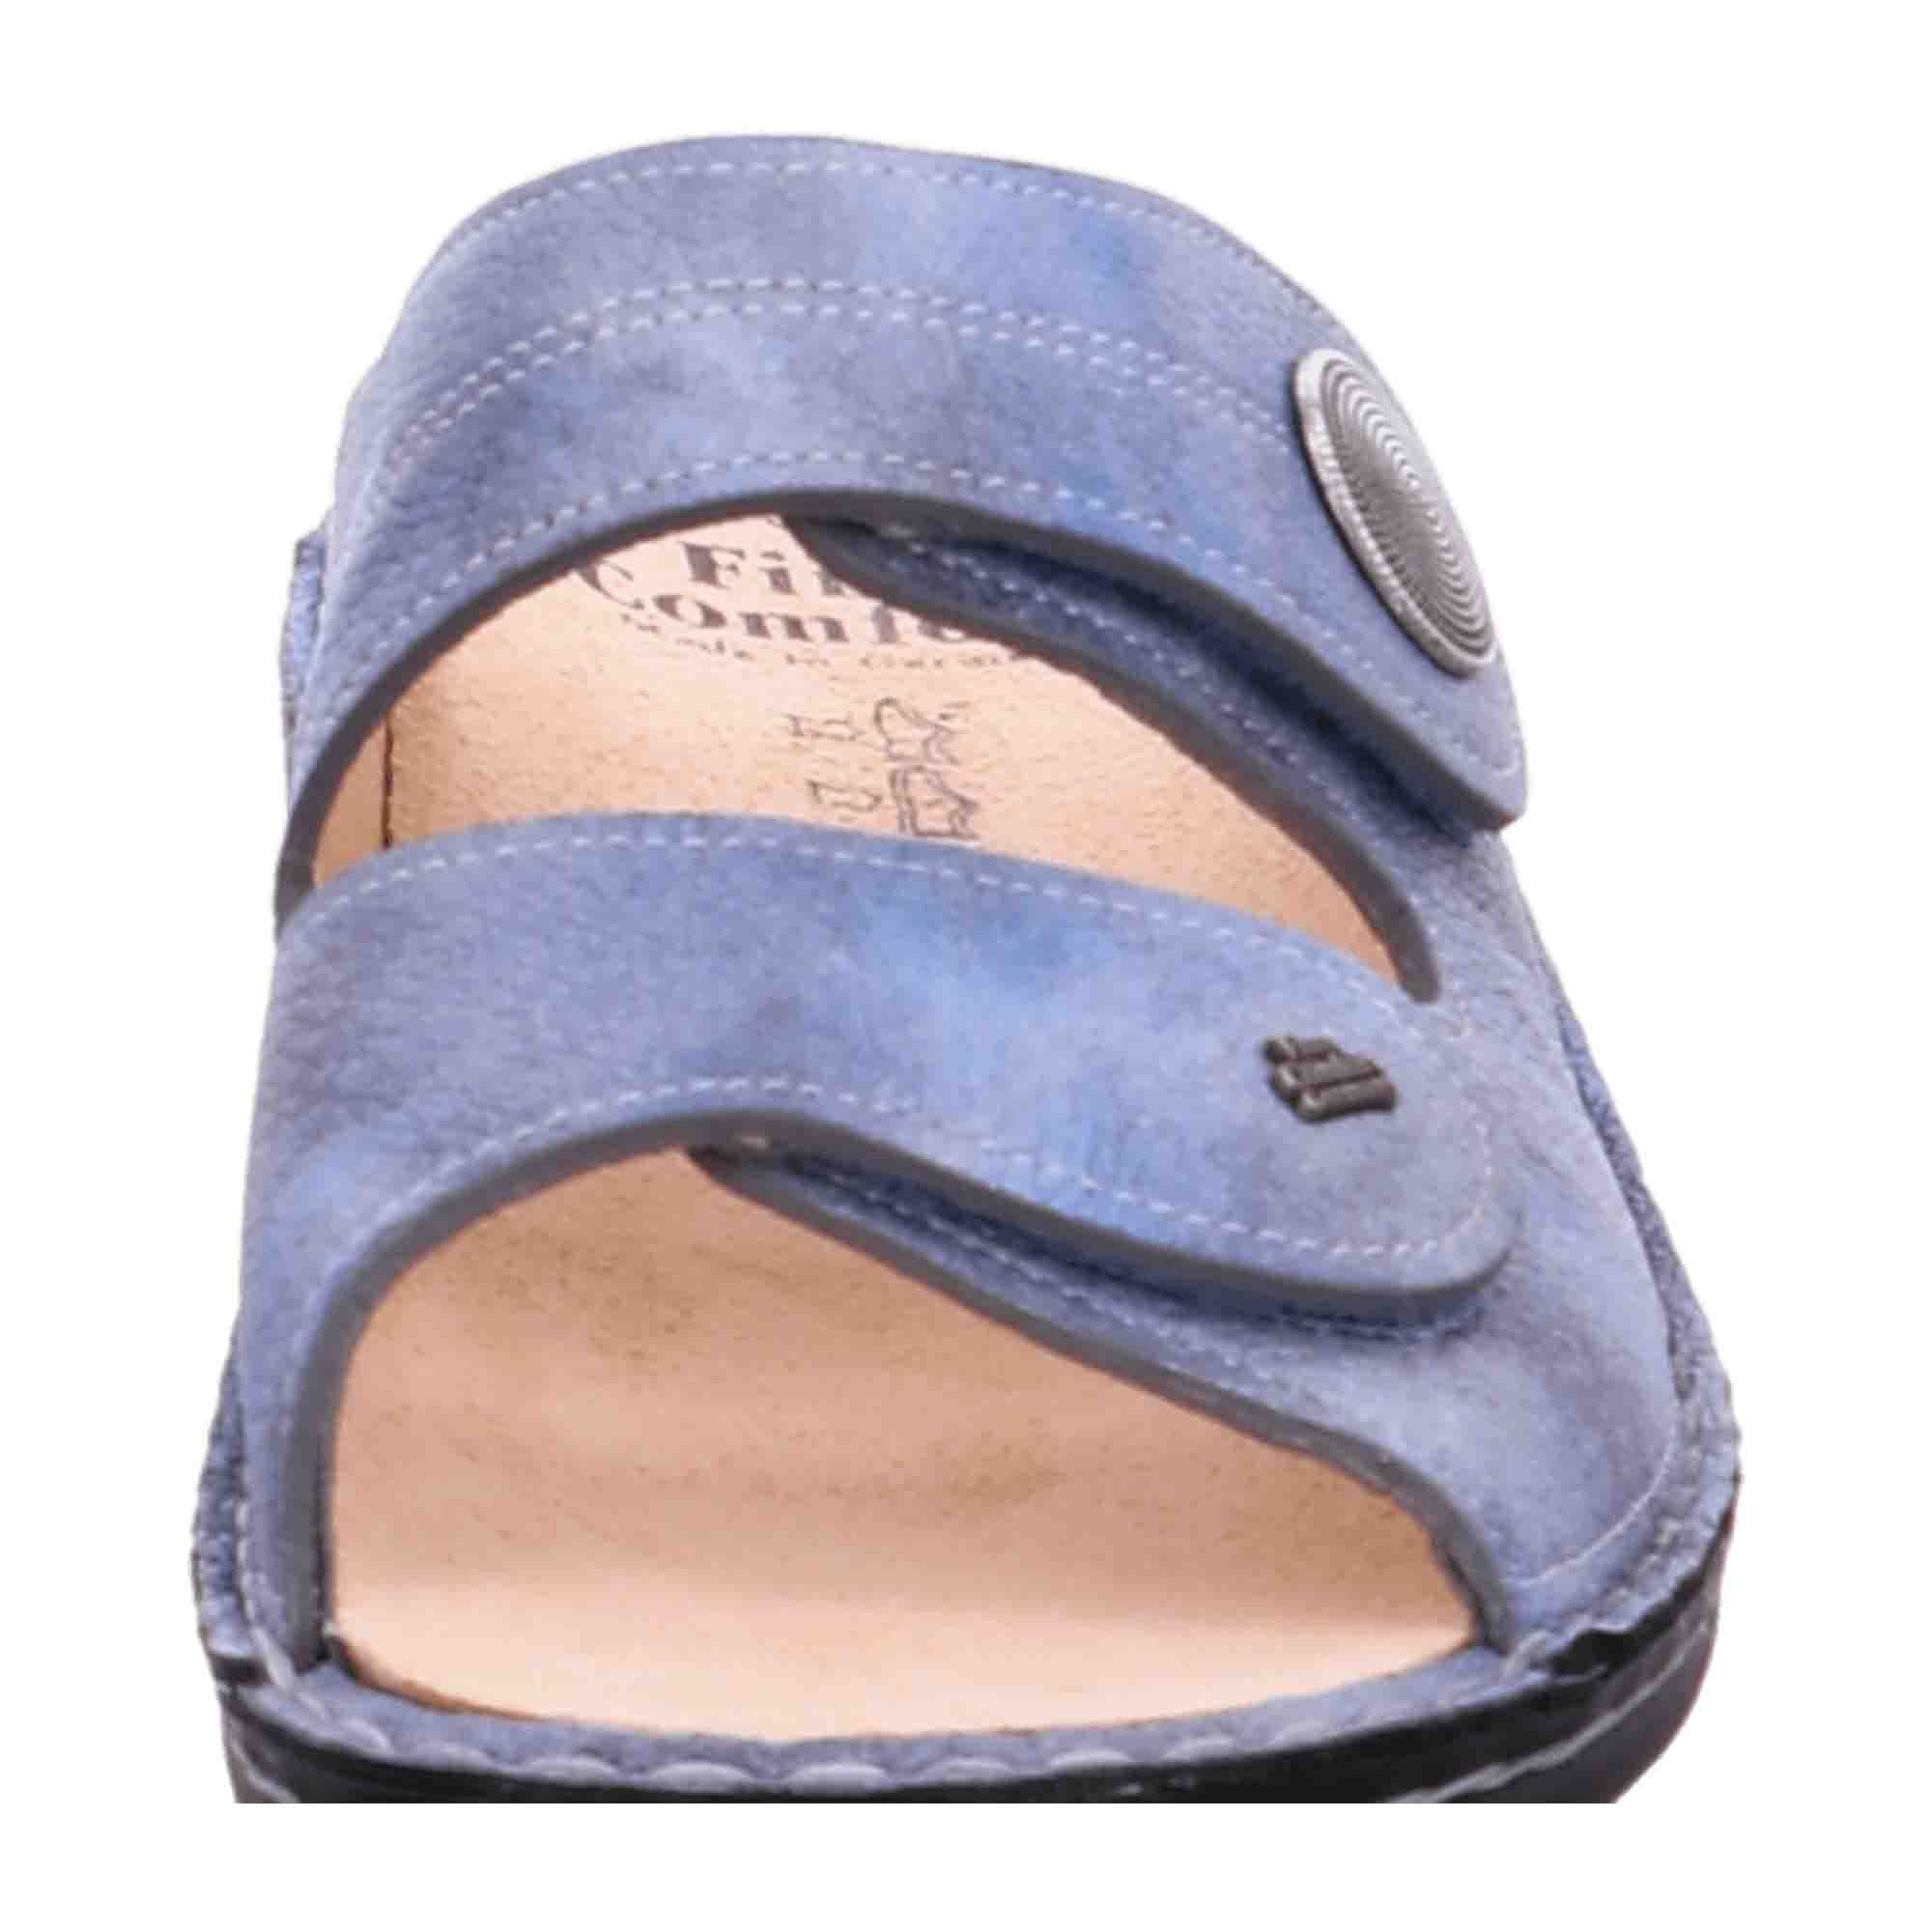 Finn Comfort Zeno Stretch Women's Comfort Sandals, Blue